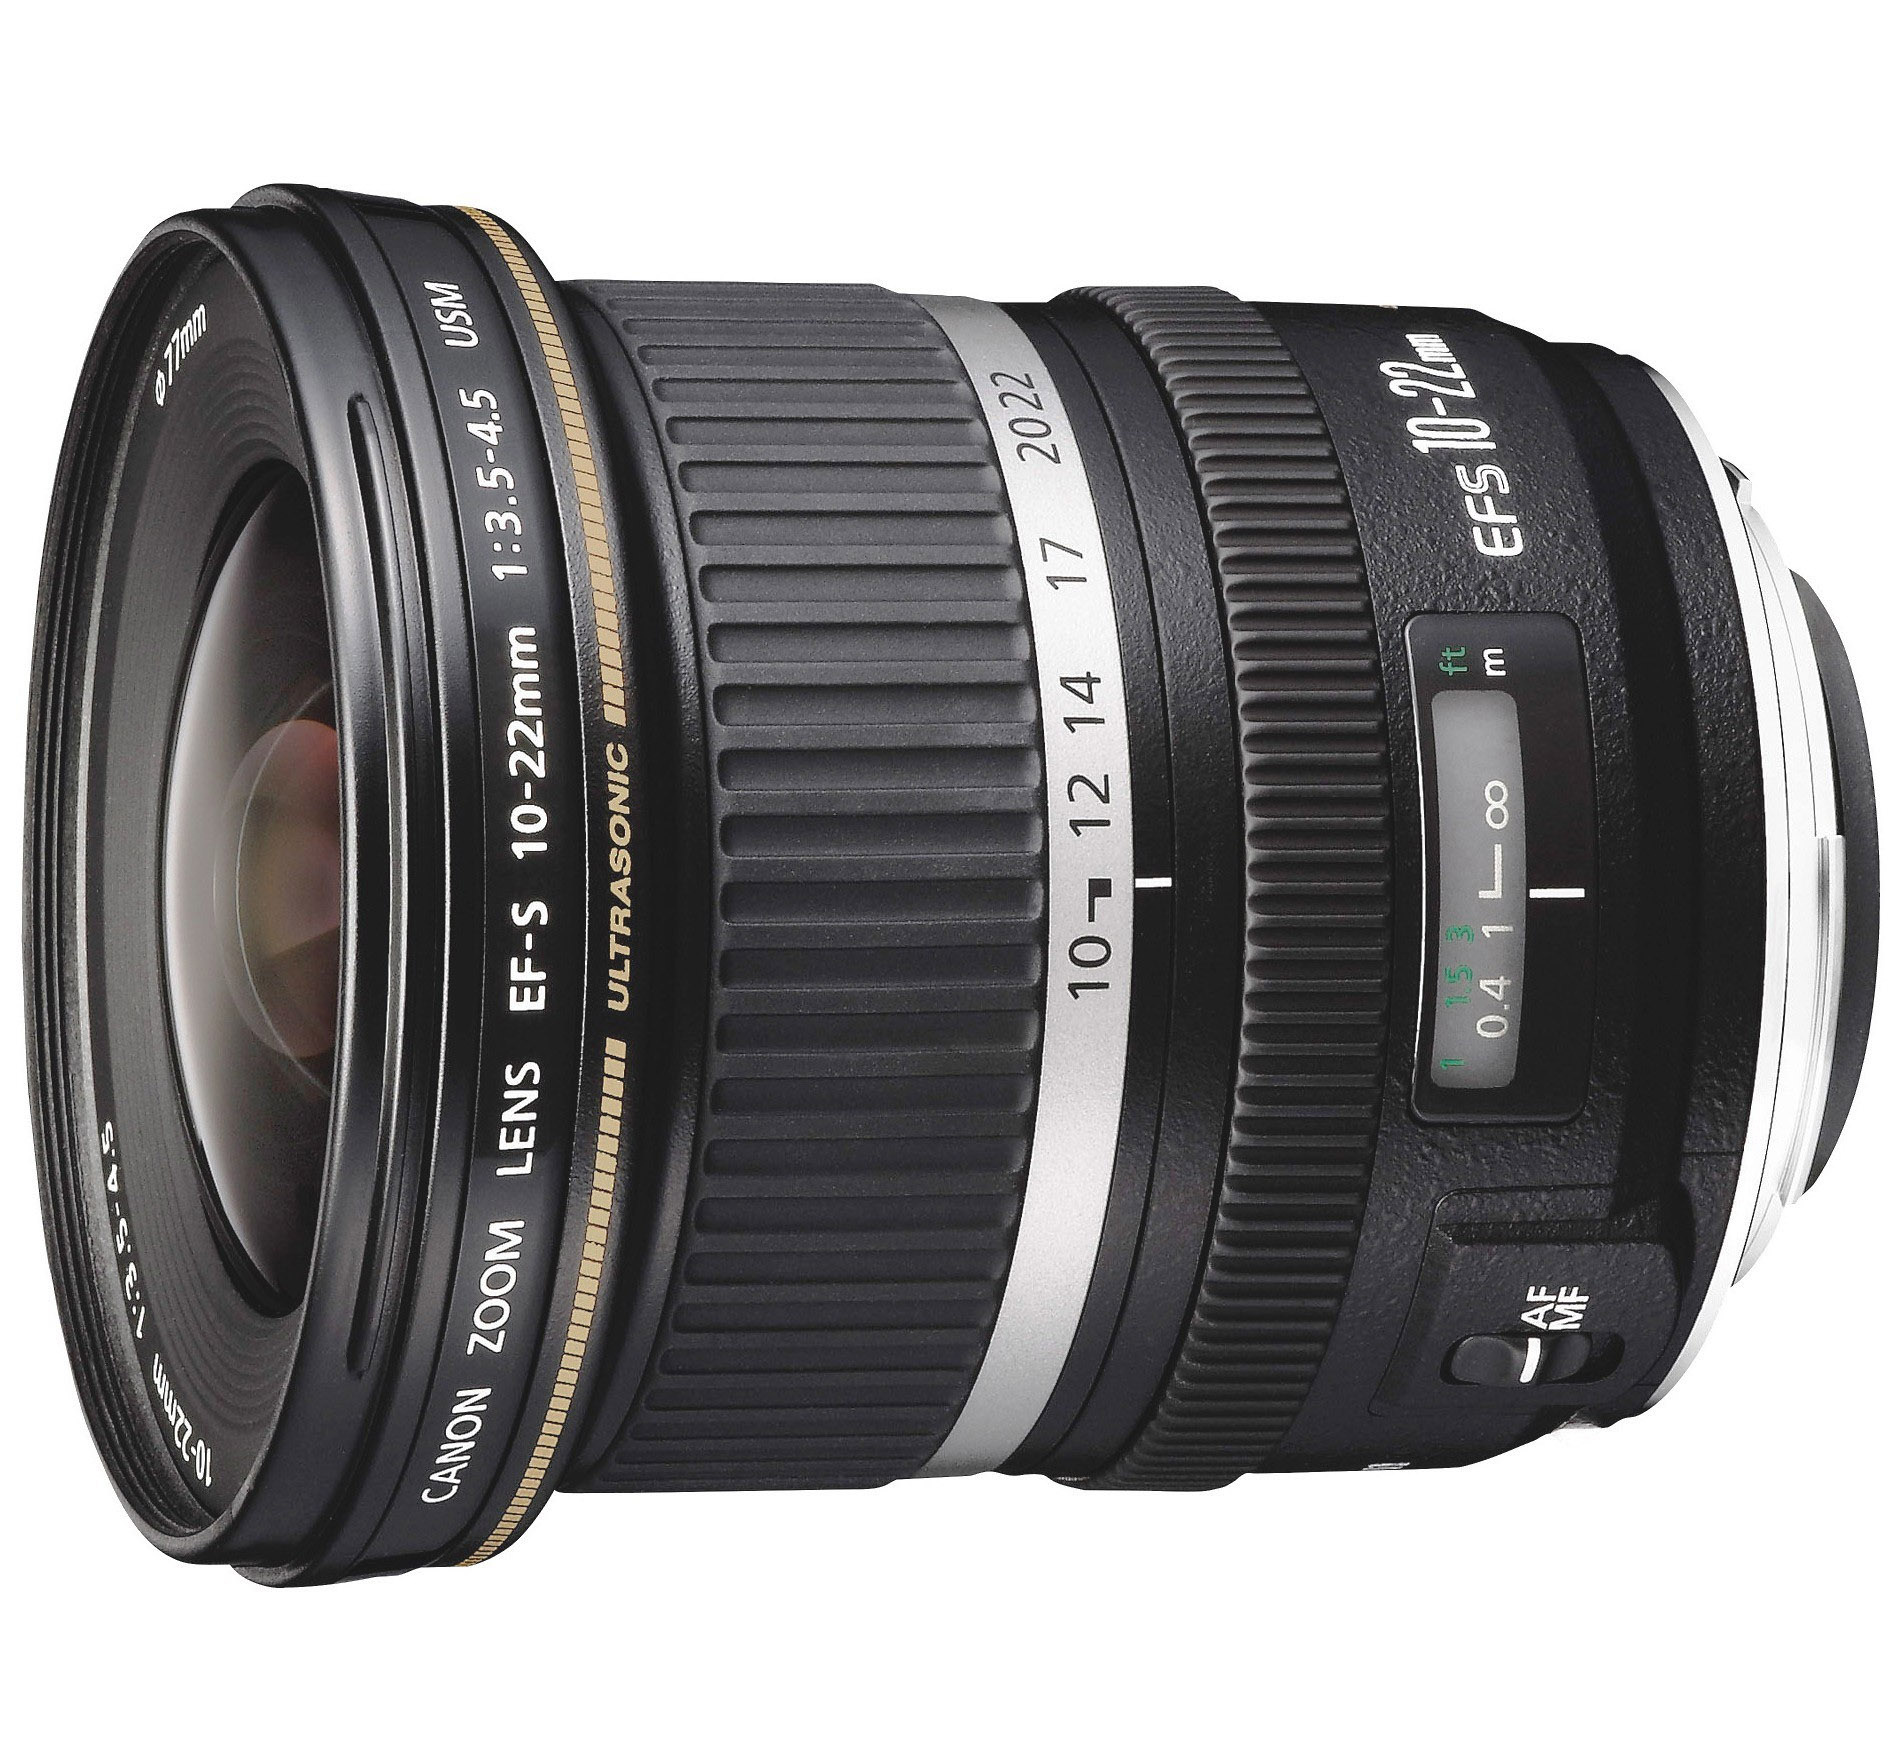 Canon EFS 10-22mm f3.5-4.5 USM Lens